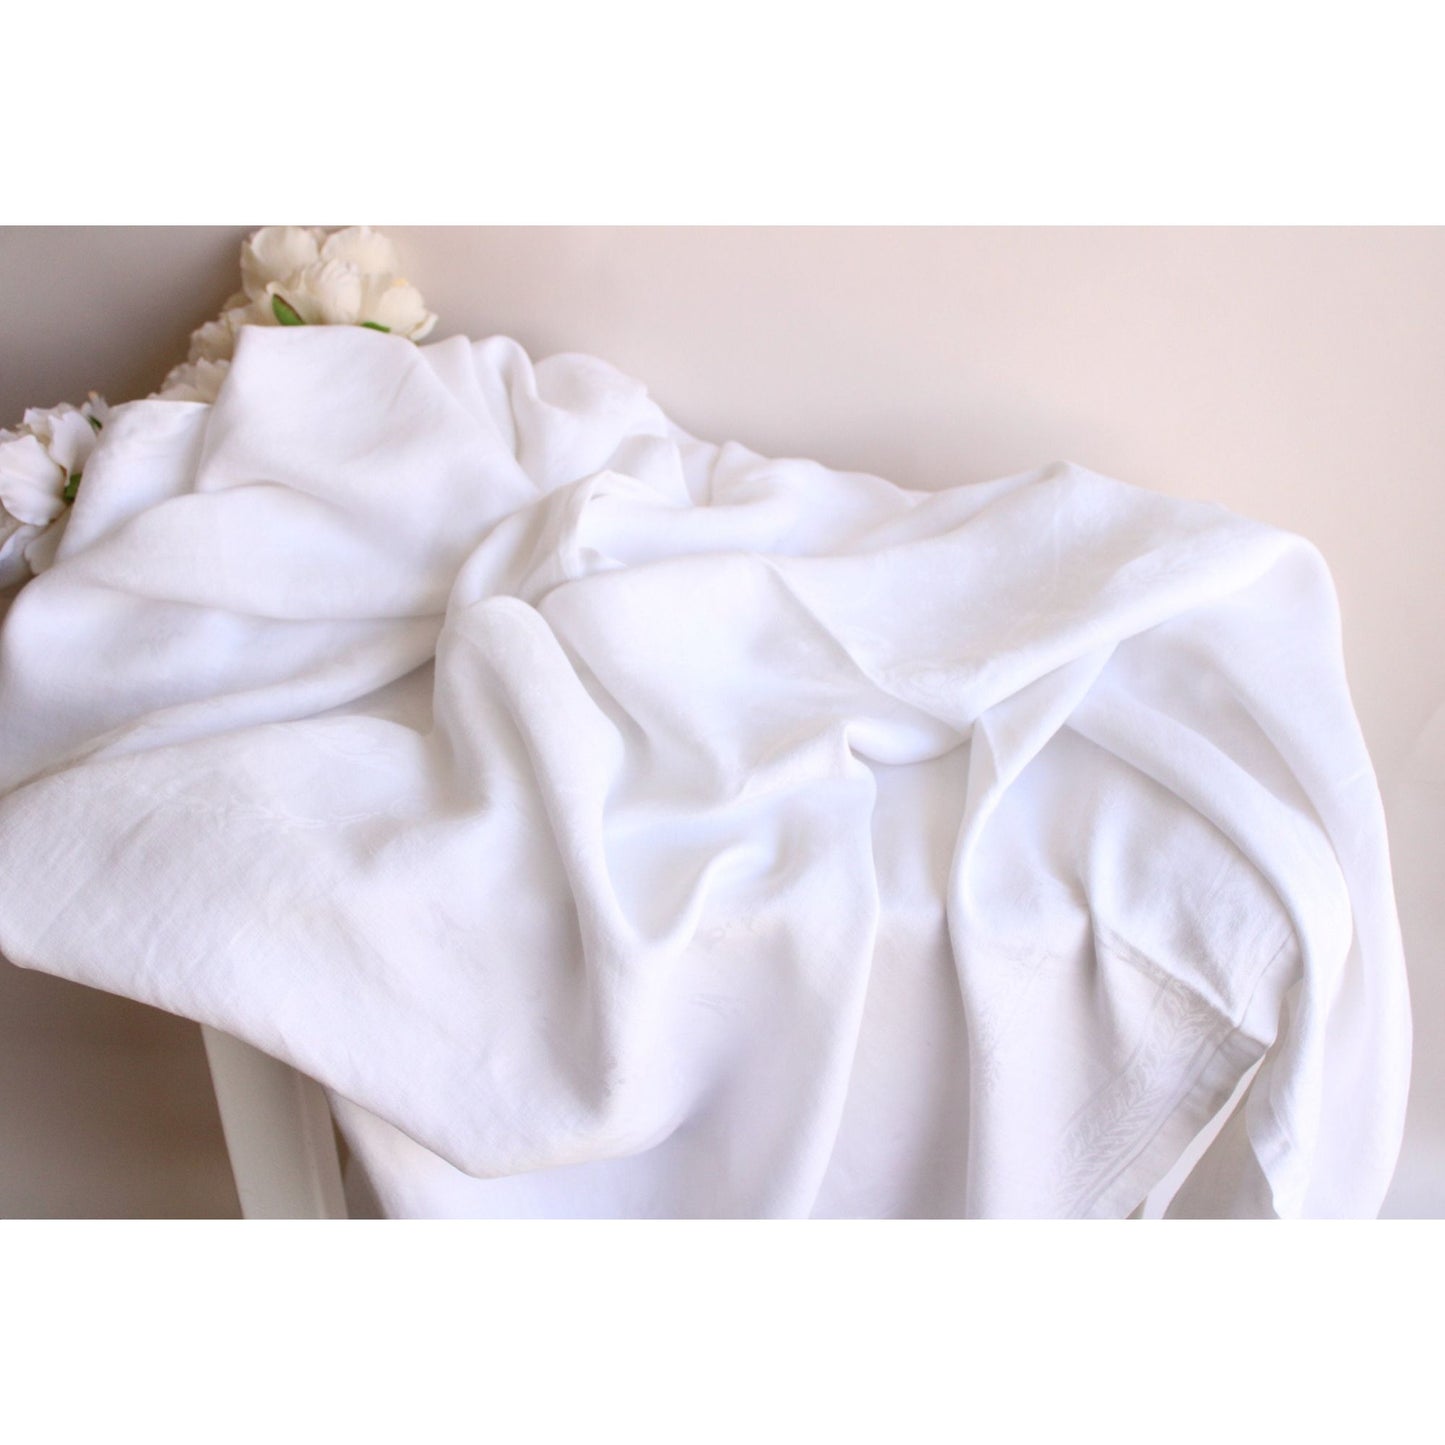 Vintage 1950s 1960s Large White Leaf Cotton Damask Rectangular Tablecloth